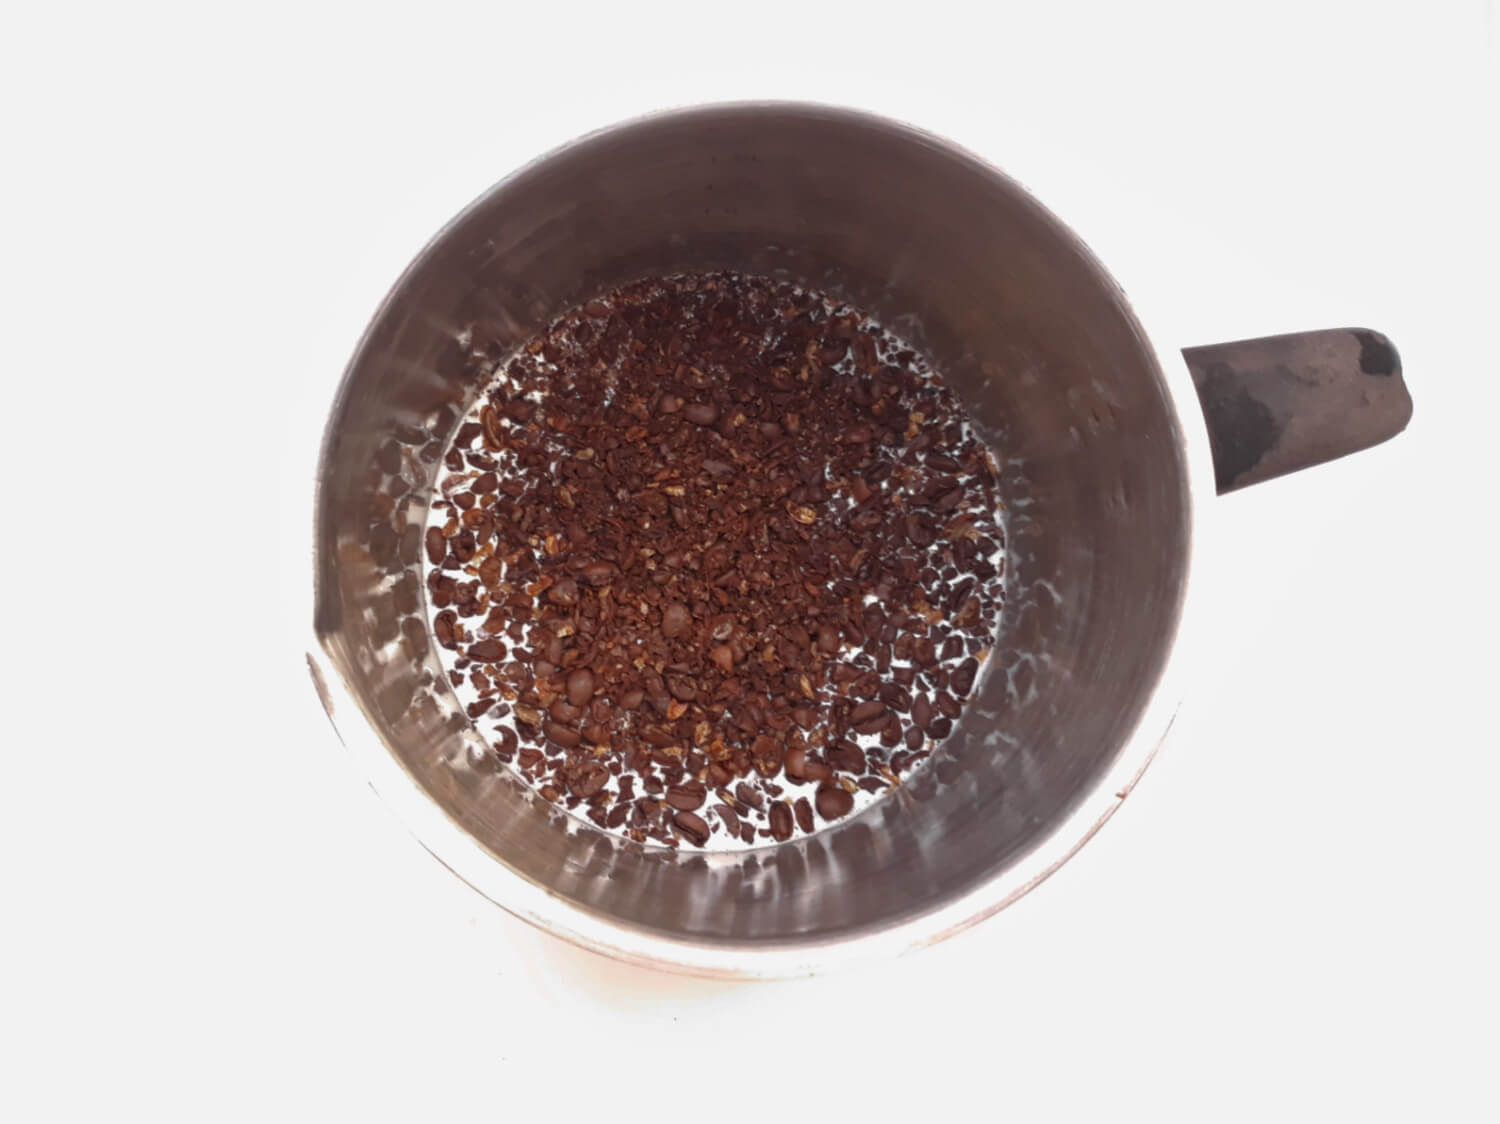 przygotowanie kremu kawowego namelaka, kawa, mleko, garnek